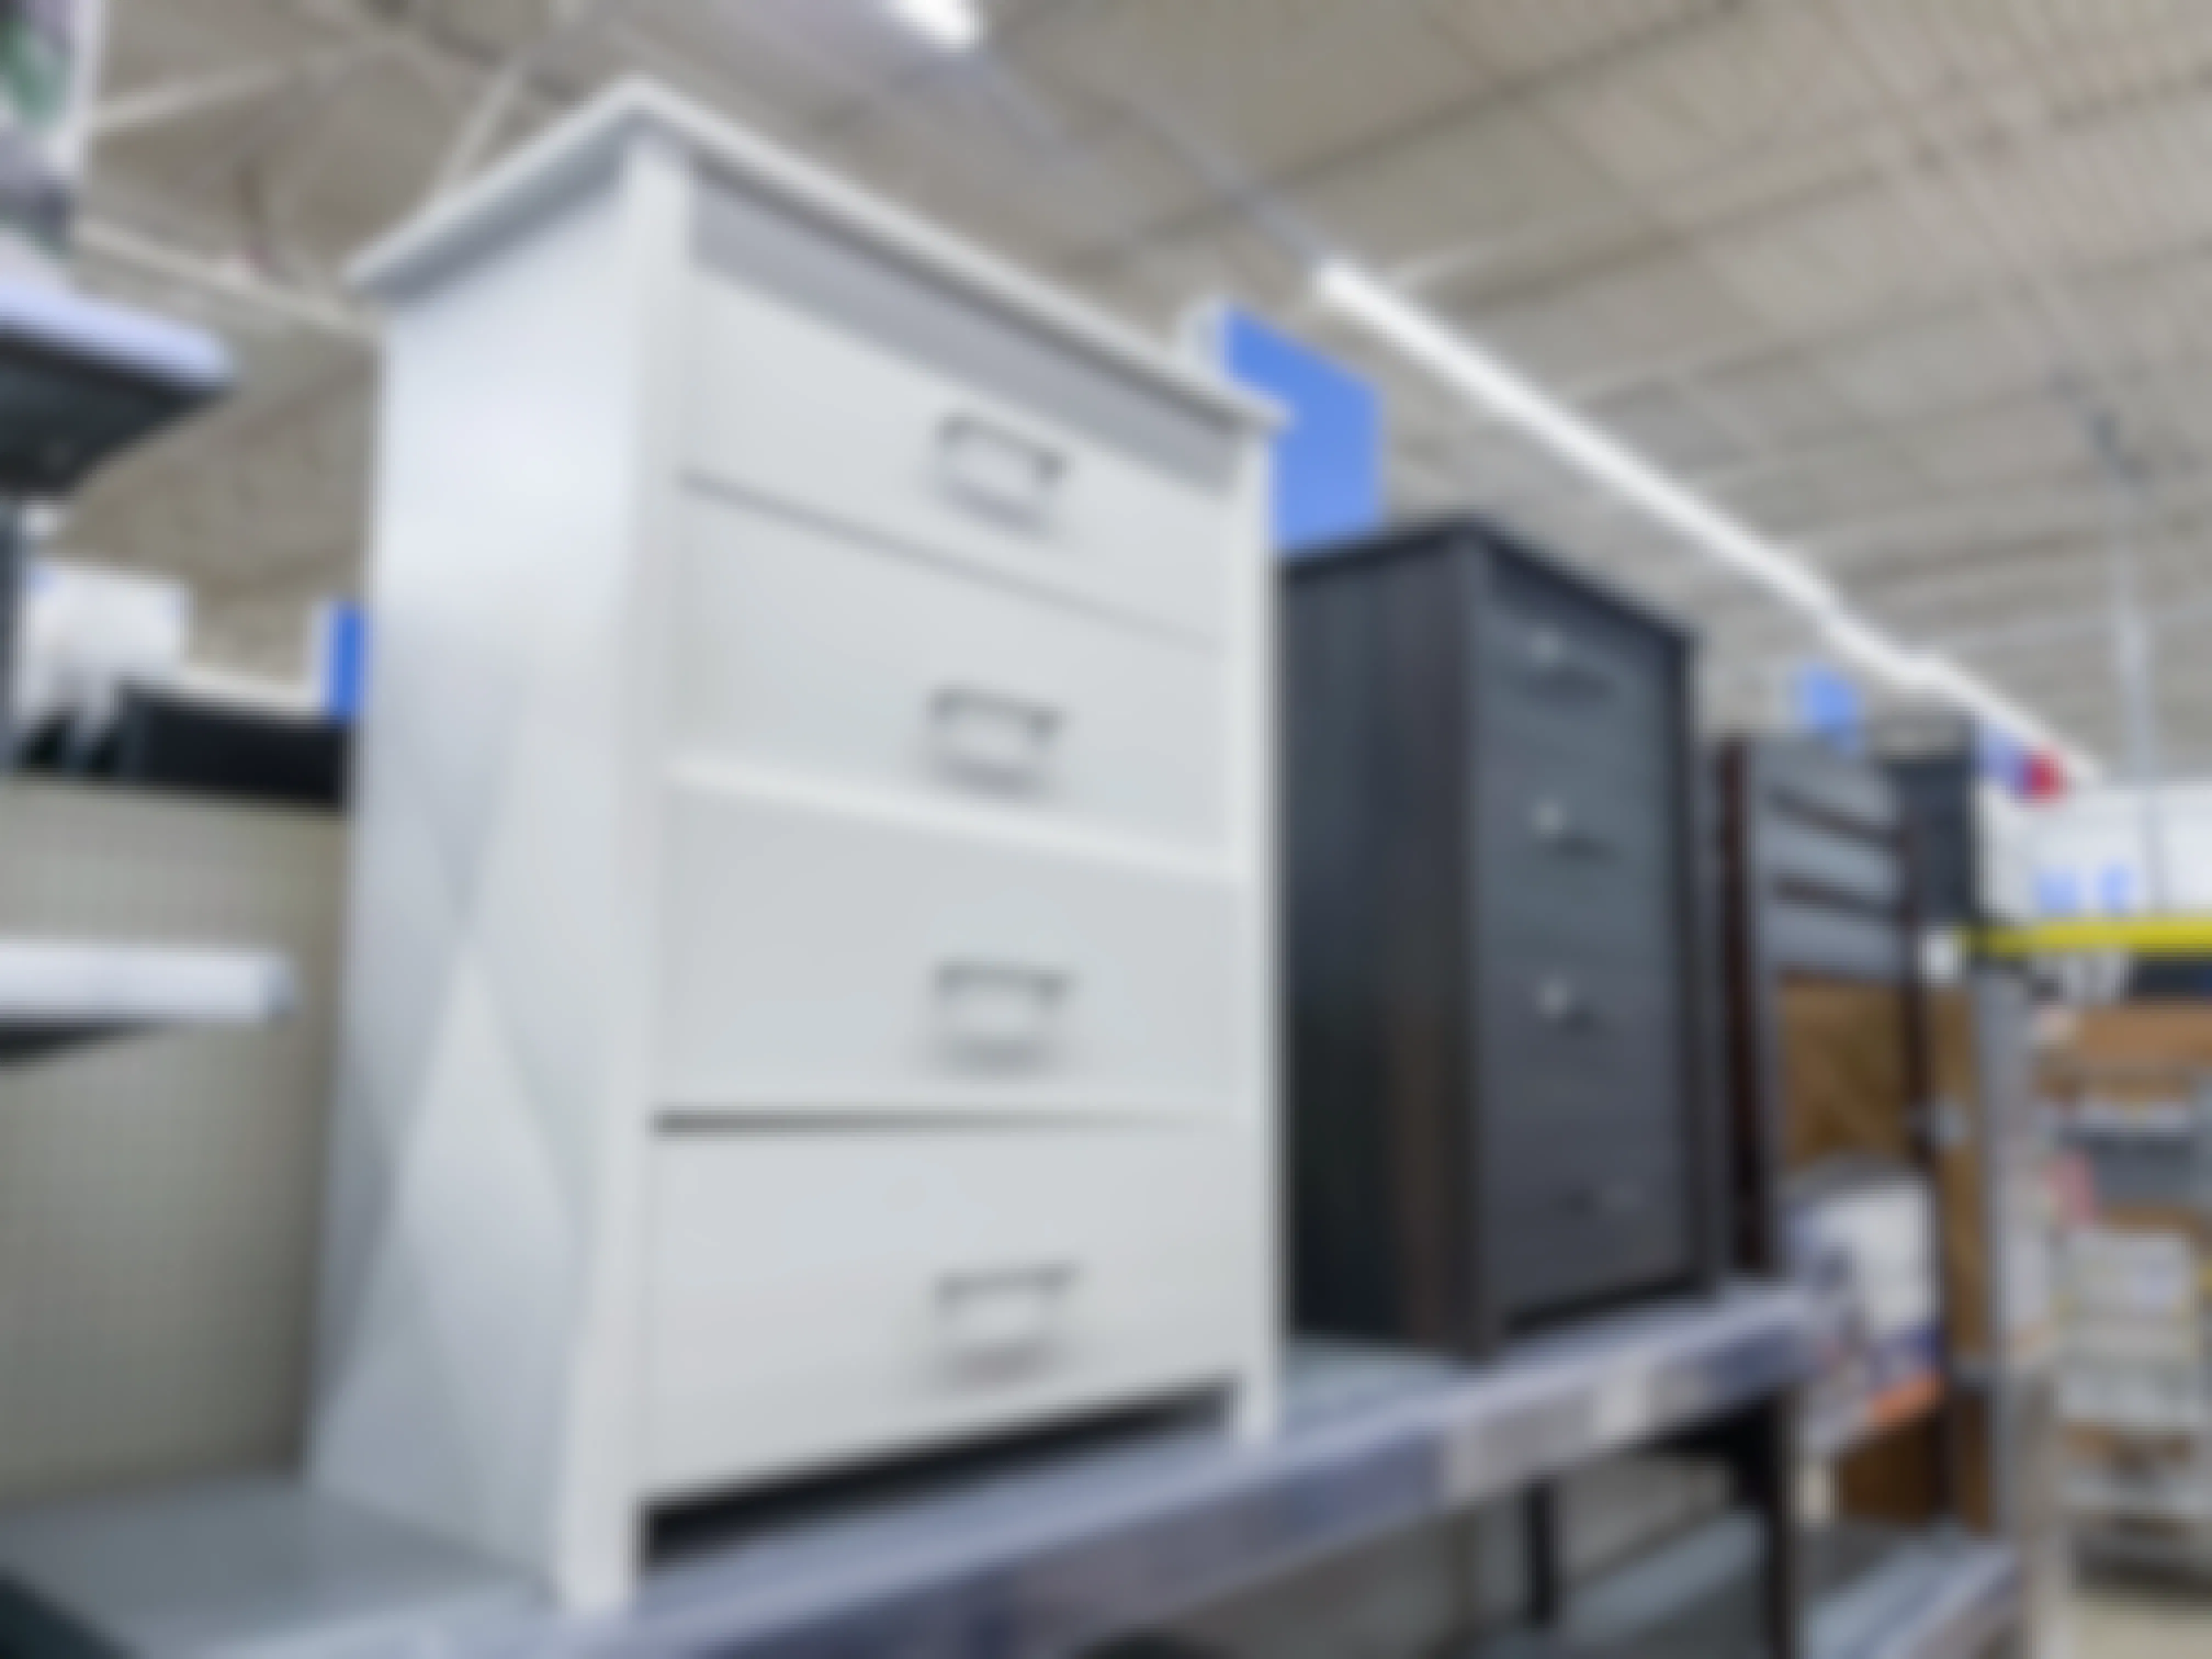 Huge Furniture Sale at Walmart — Up to 72% Off